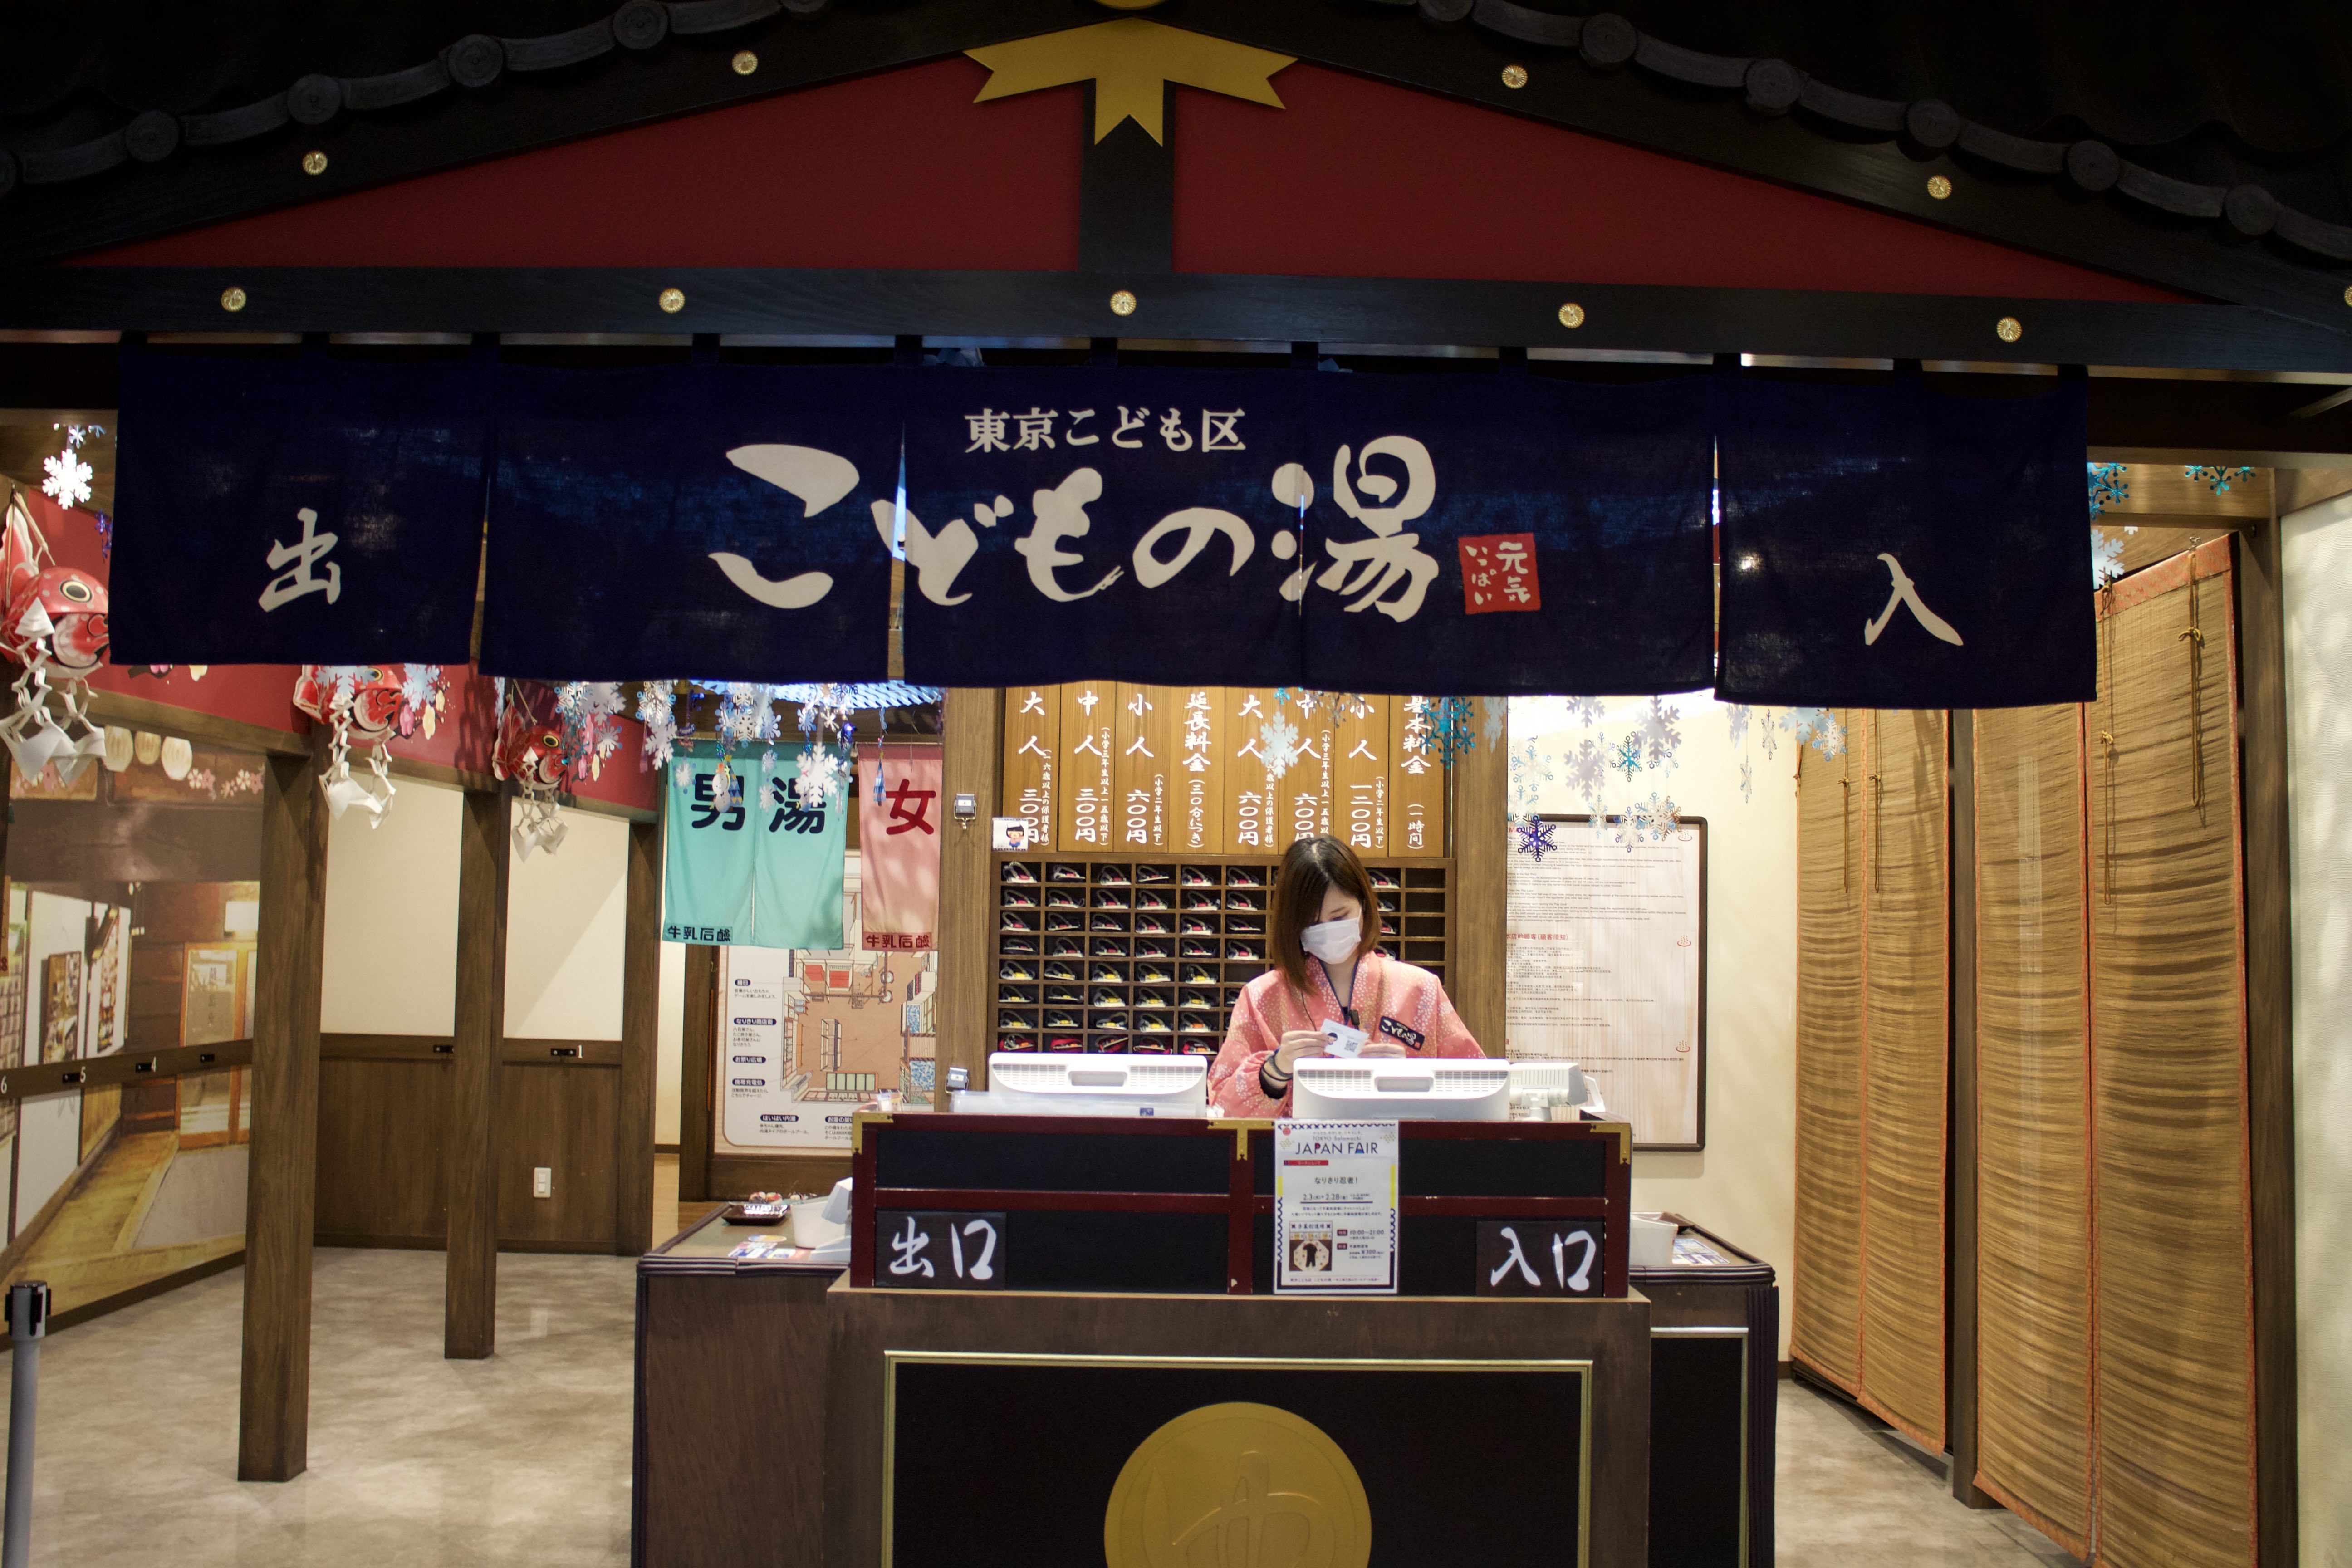 sento themed playground entrance, staff is dressed in yukata